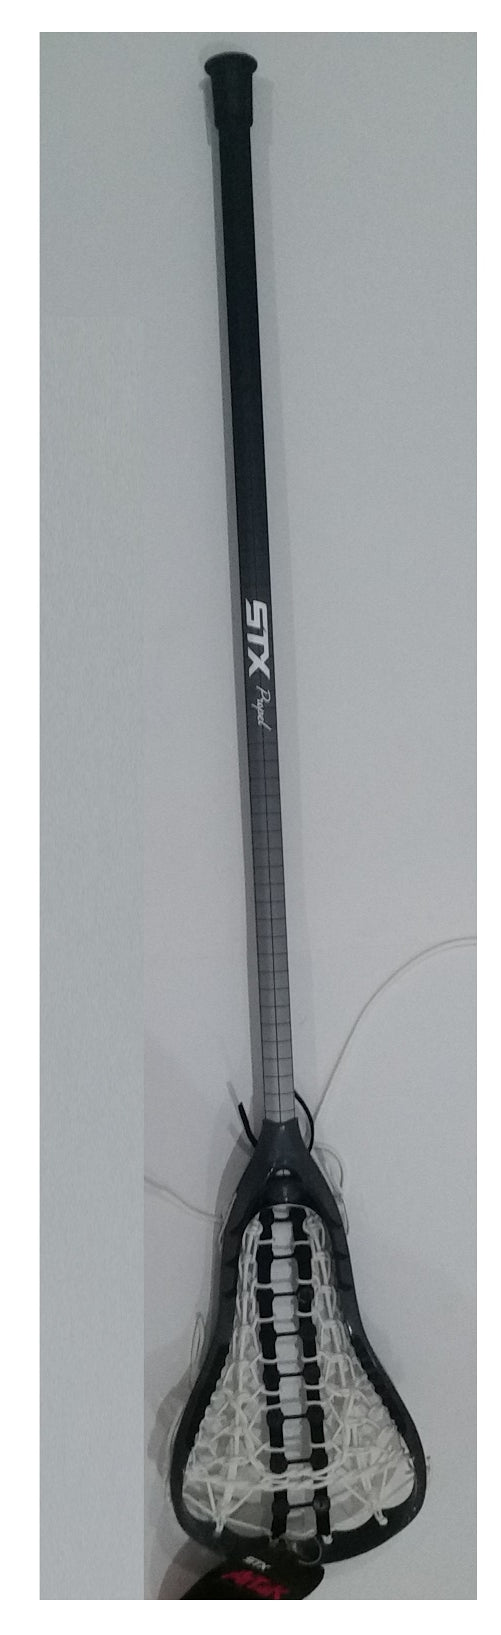 STX Women's Complete Lacrosse Stick Attak Head with Propel Shaft, Black/Gray